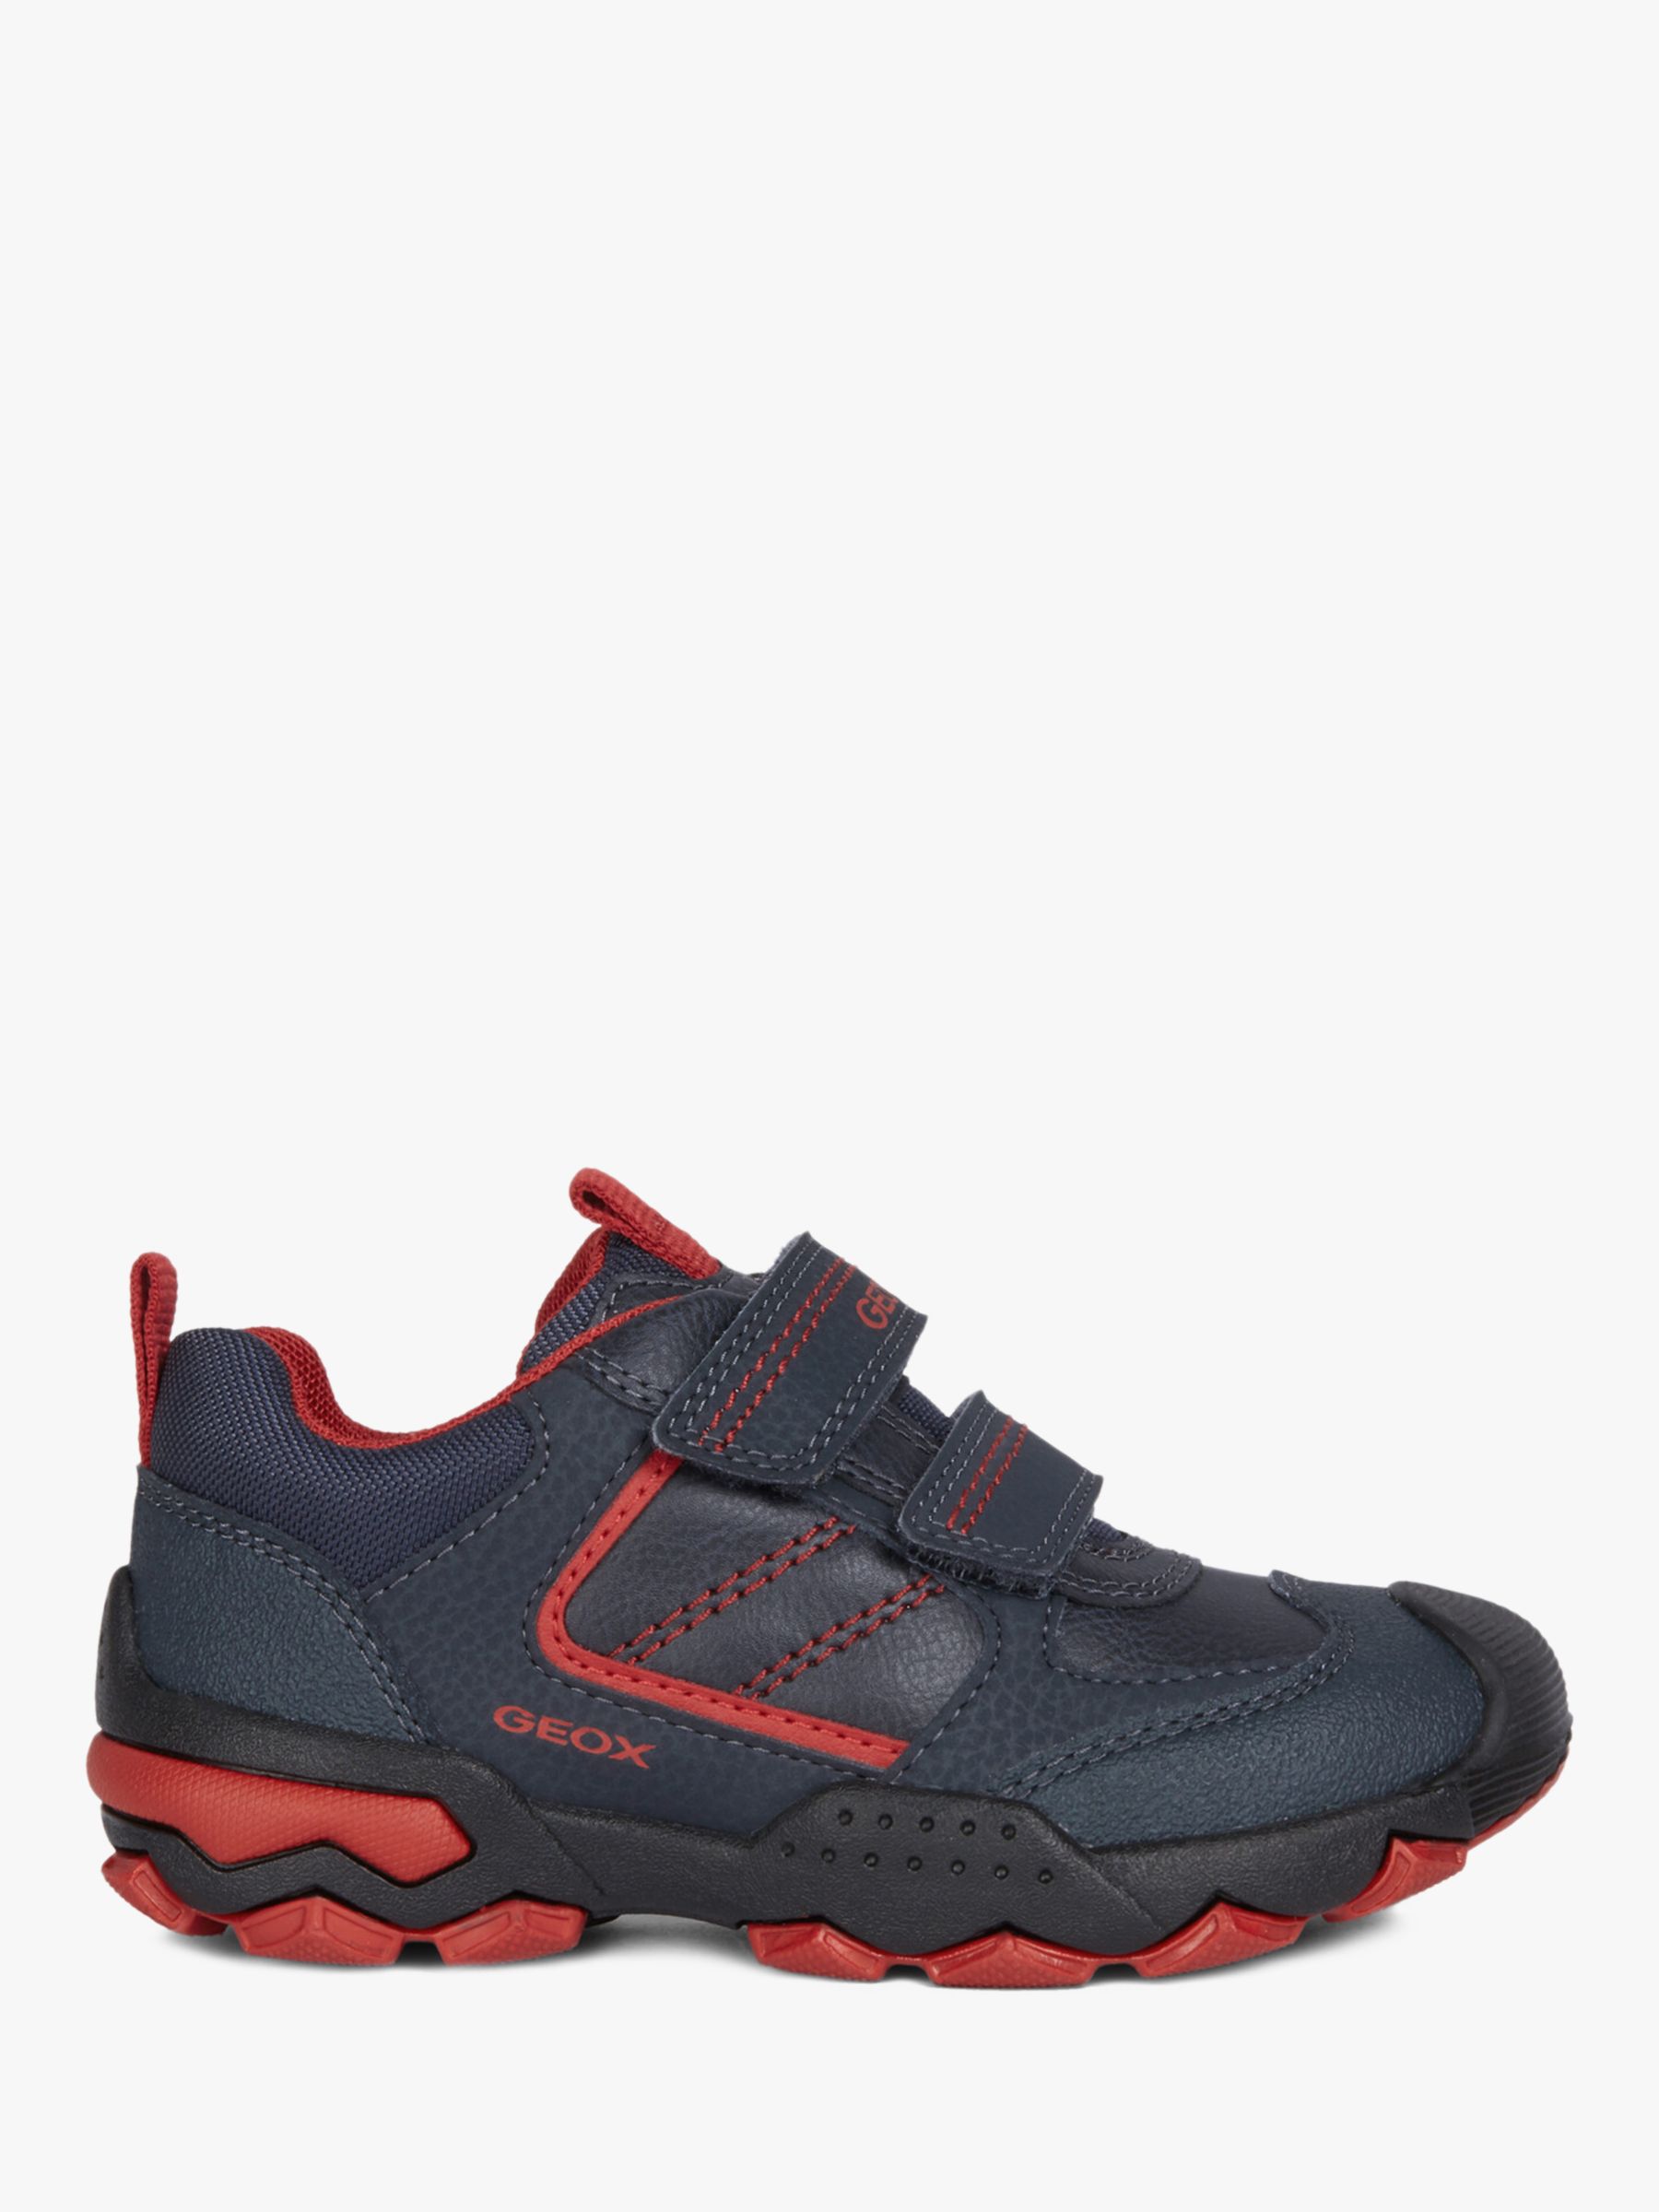 Geox Children's Buller Shoes, Navy/Dark Red